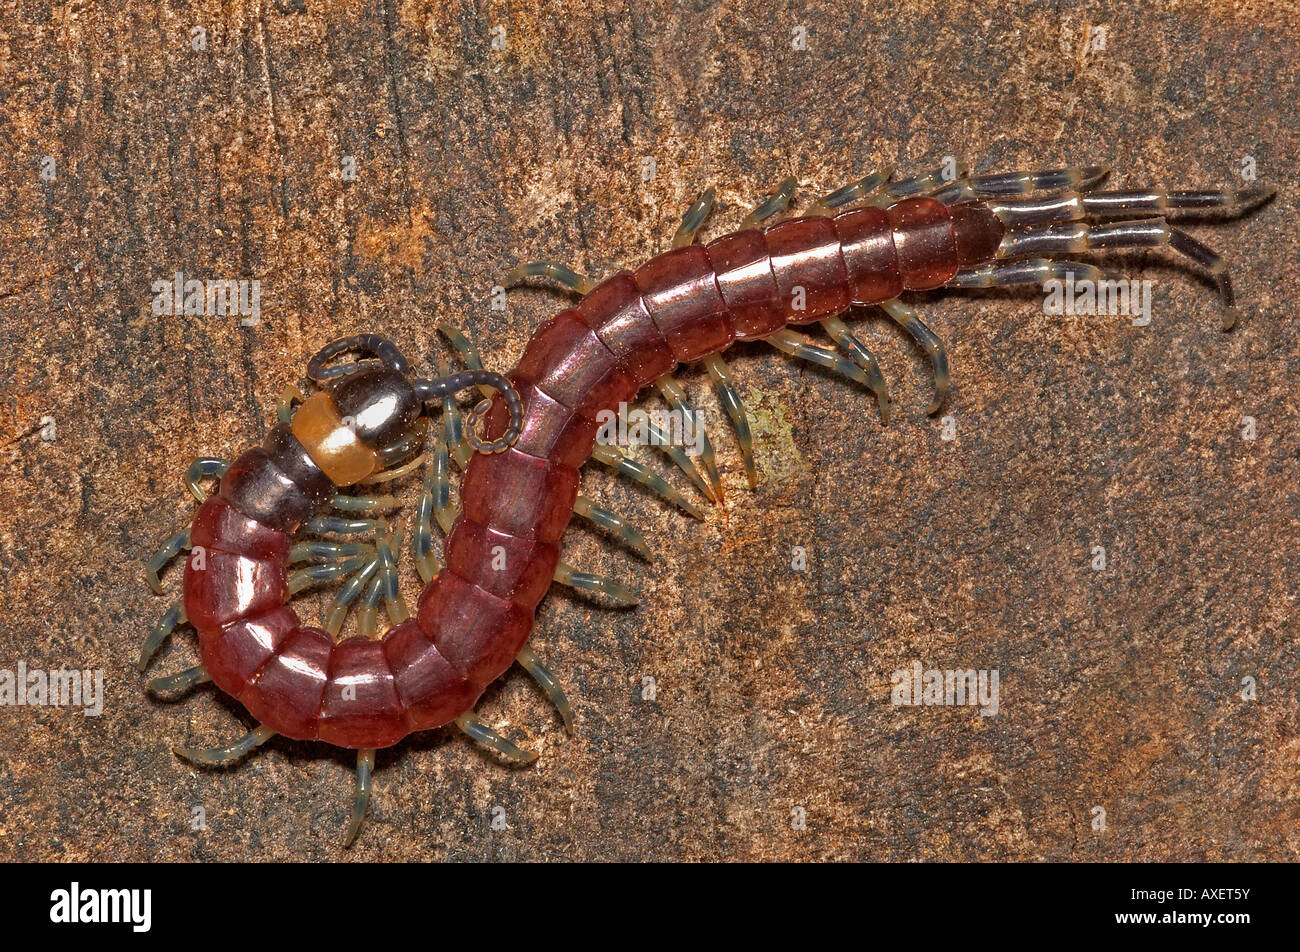 CENTIPEDE, arthropodes, SCOLOPENDRA. Vue dorsale d'Scolopendra rose ou Centipede. Photographié à Agumbe, Karnataka, Inde. Banque D'Images